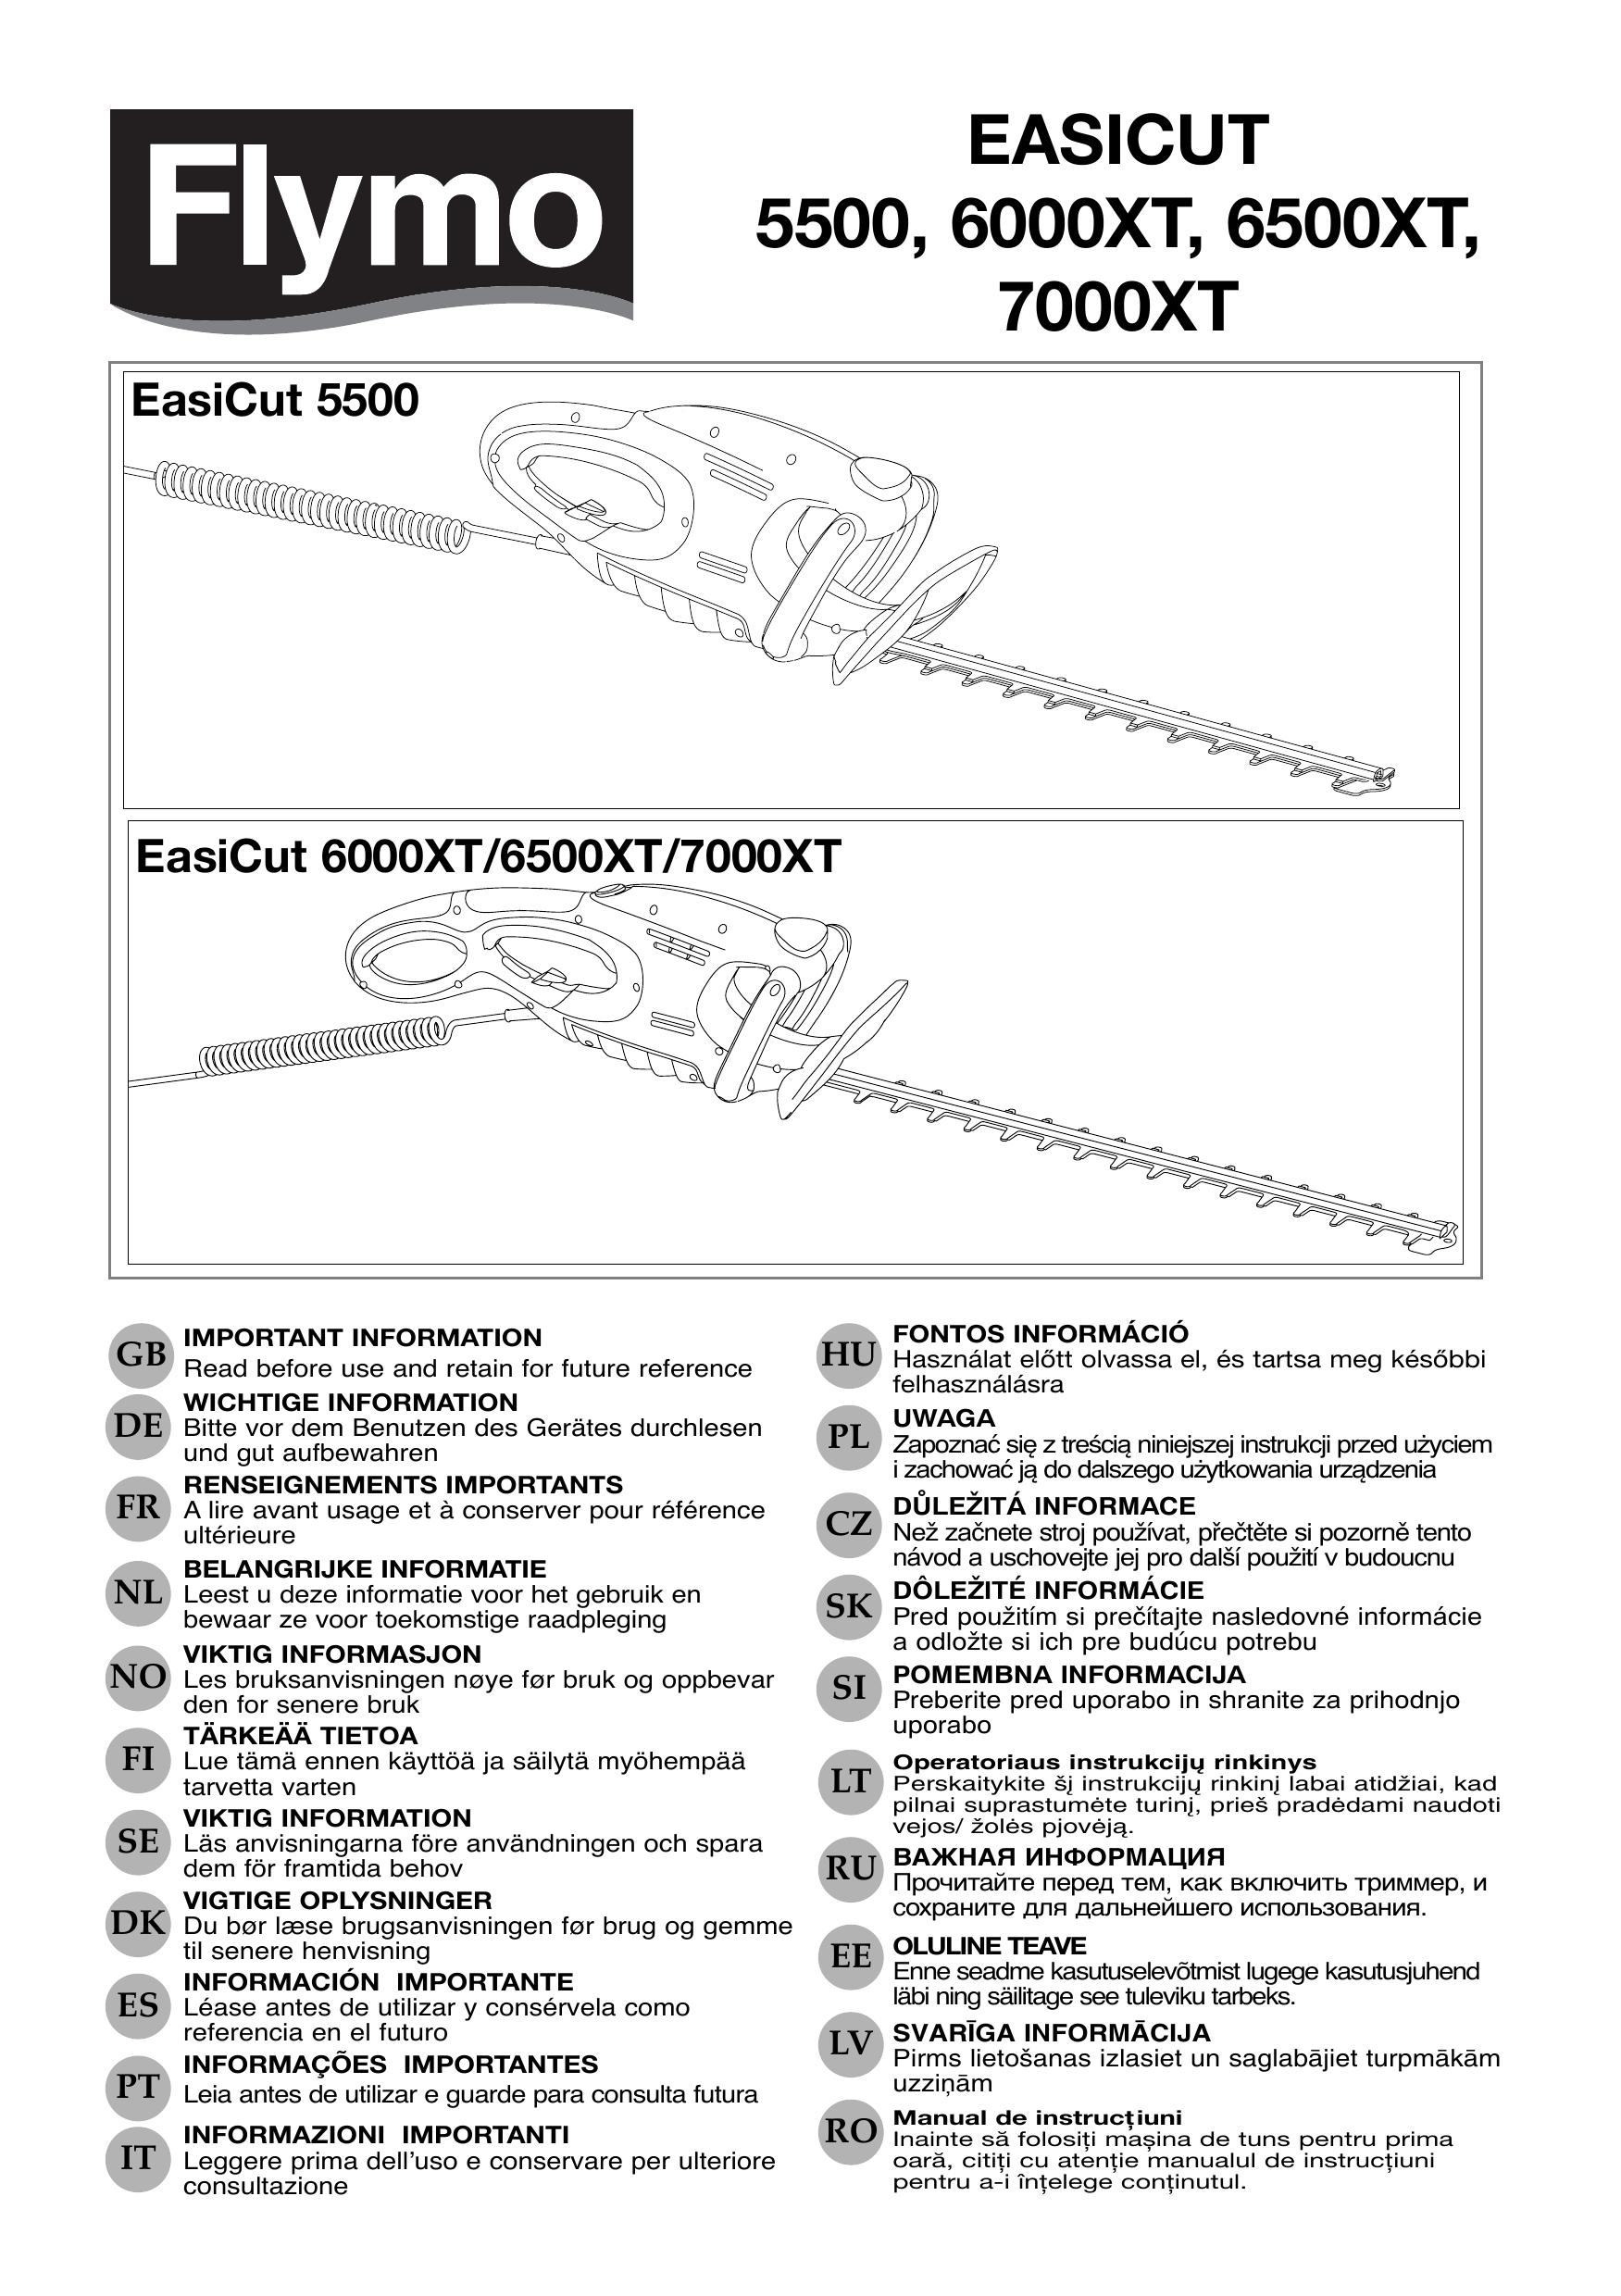 Flymo 6500XT Trimmer User Manual